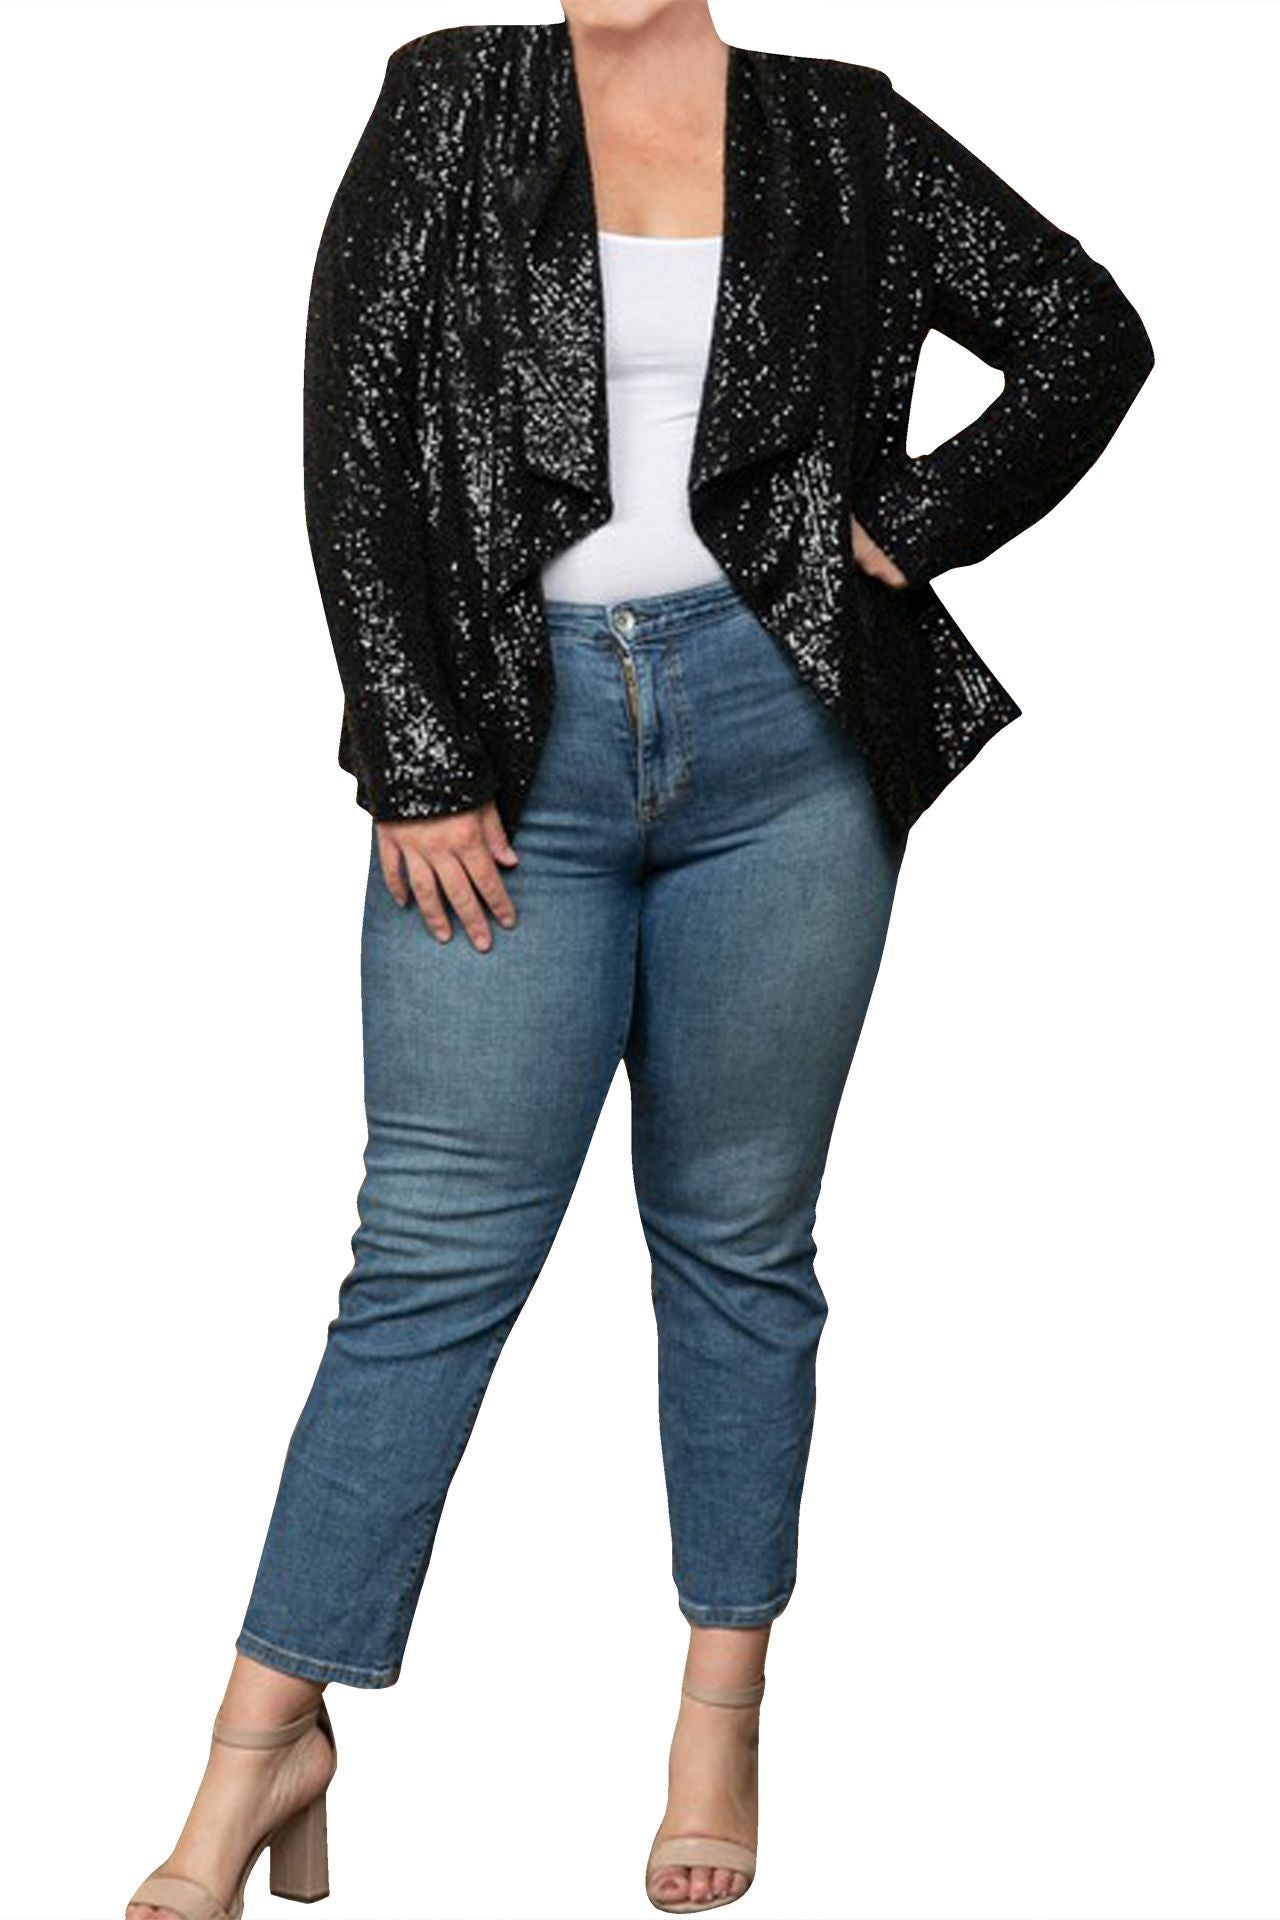 "black sequin jacket womens" "Kyle X Shahida" "plus size sequin jacket" "sequin jacket women" "sequence jackets for women"